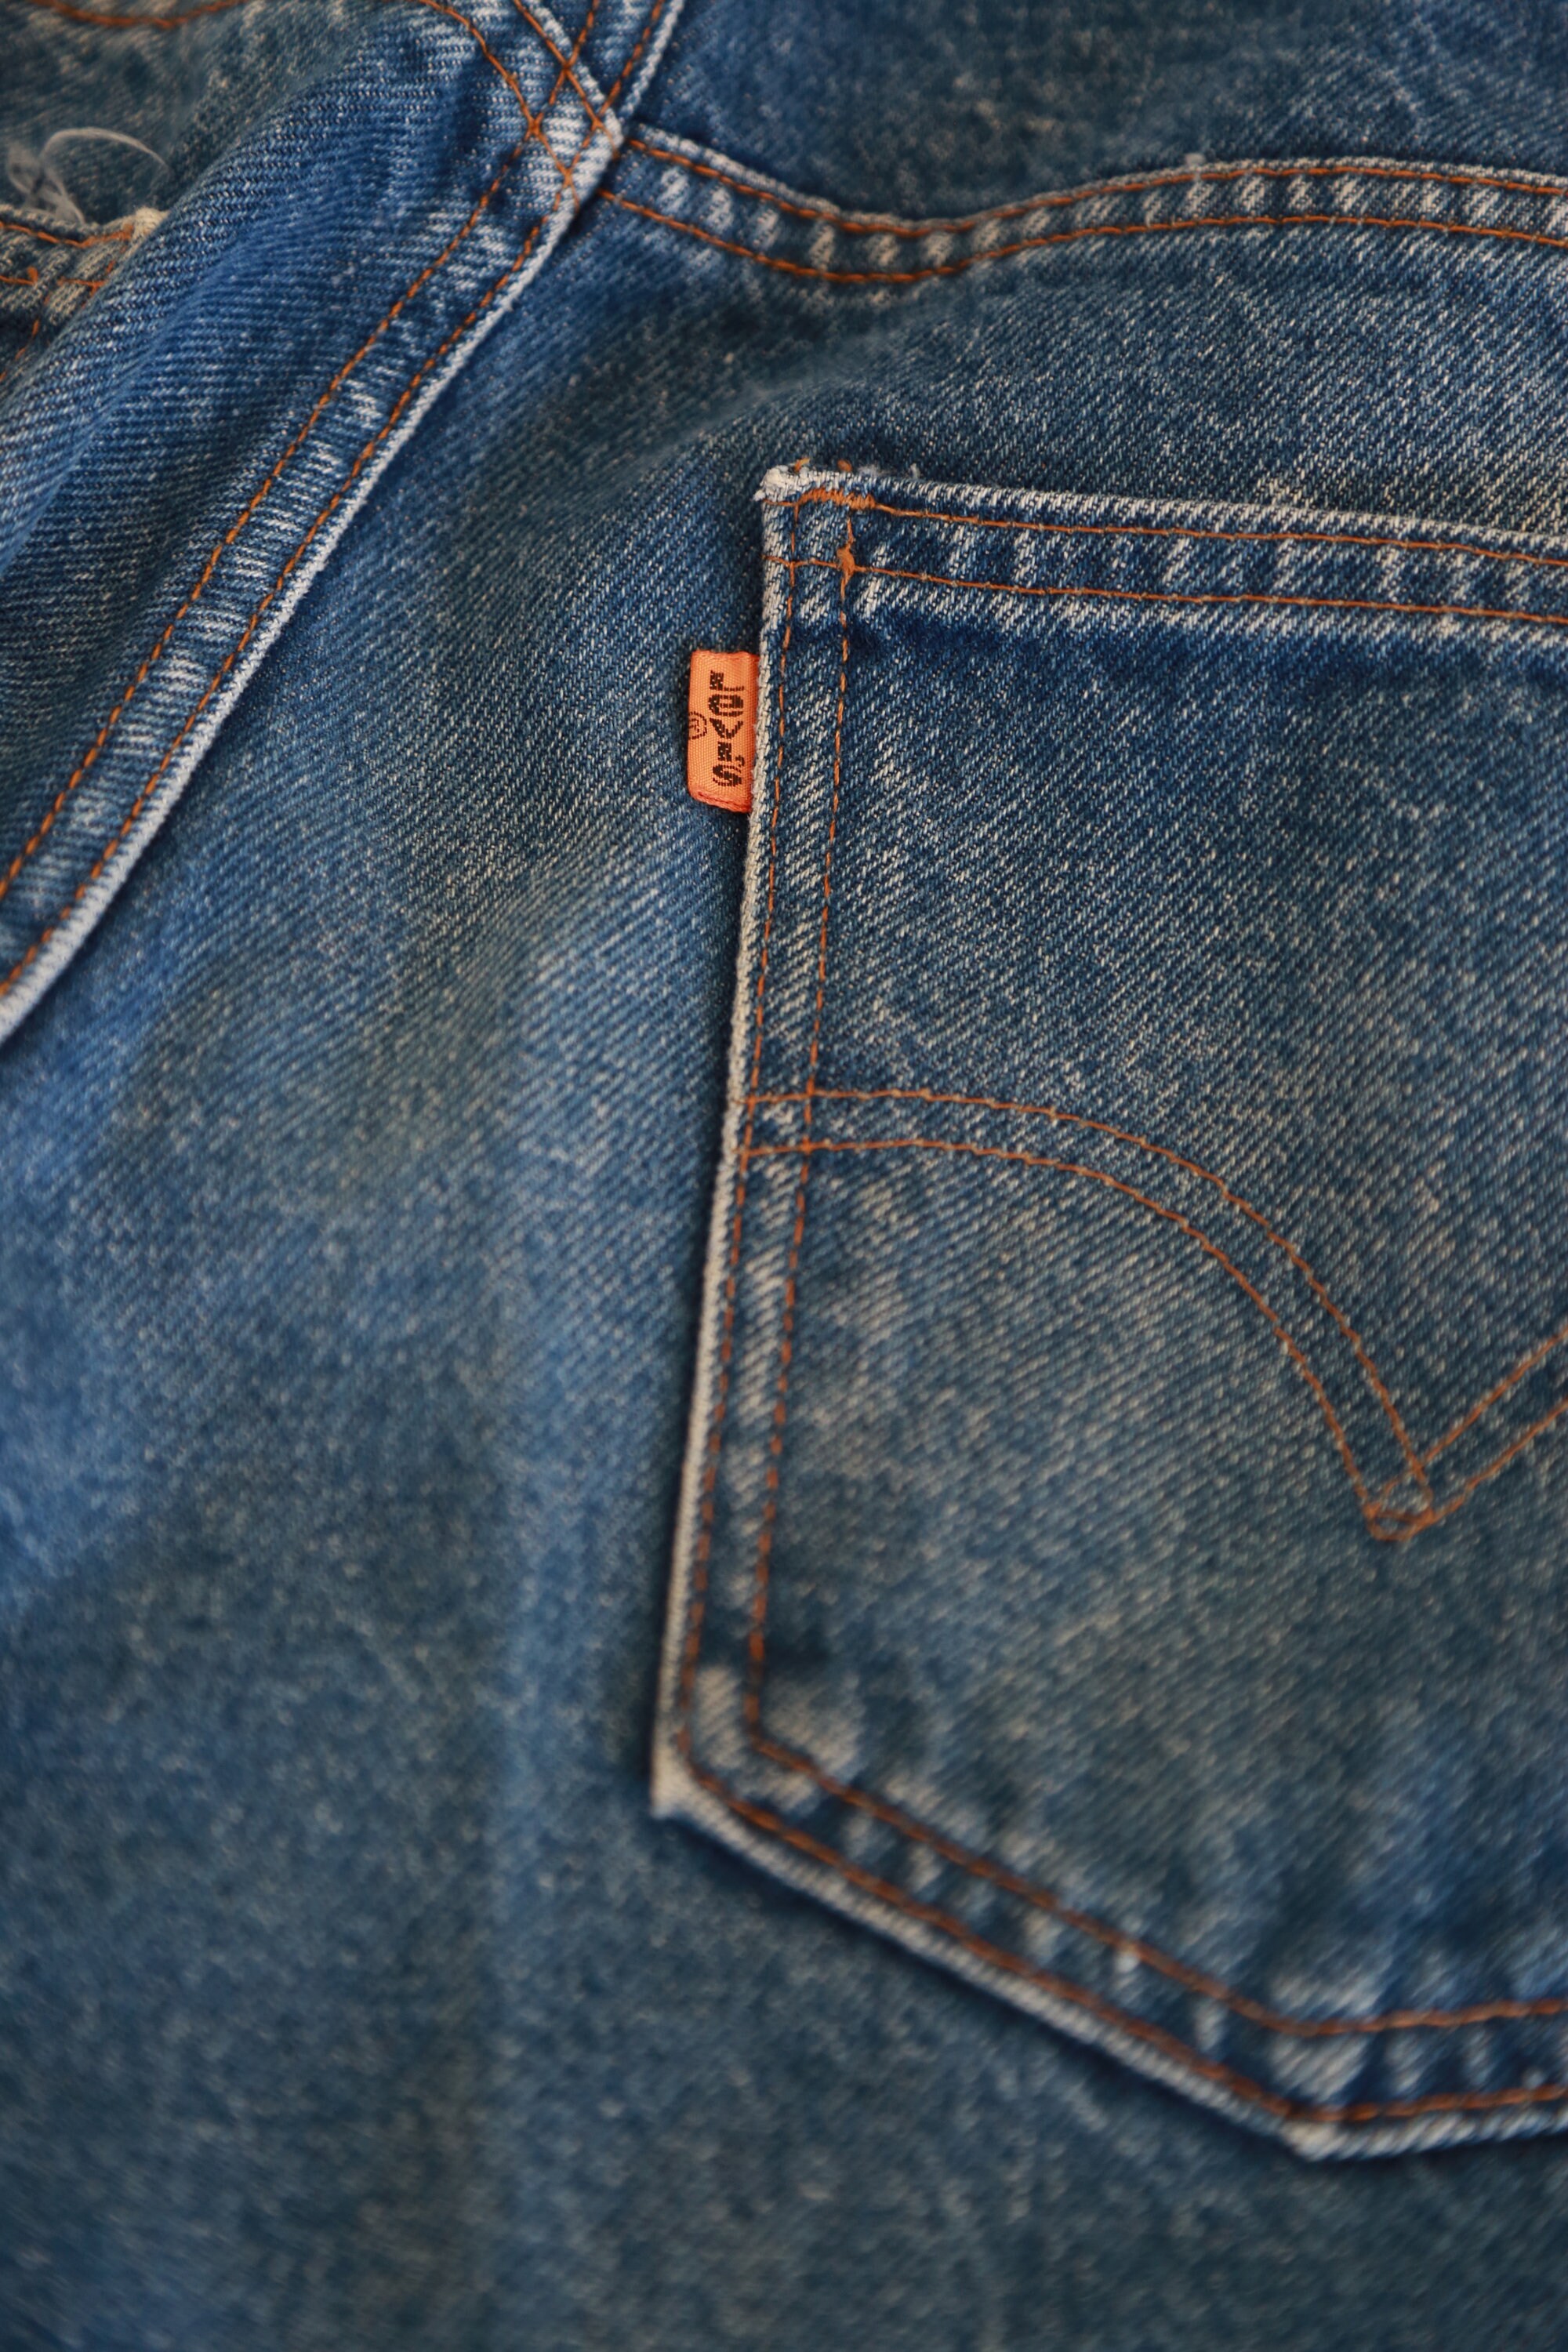 684 Levis Vintage 60s 70s orange tab Levis indigo blue jeans | Etsy